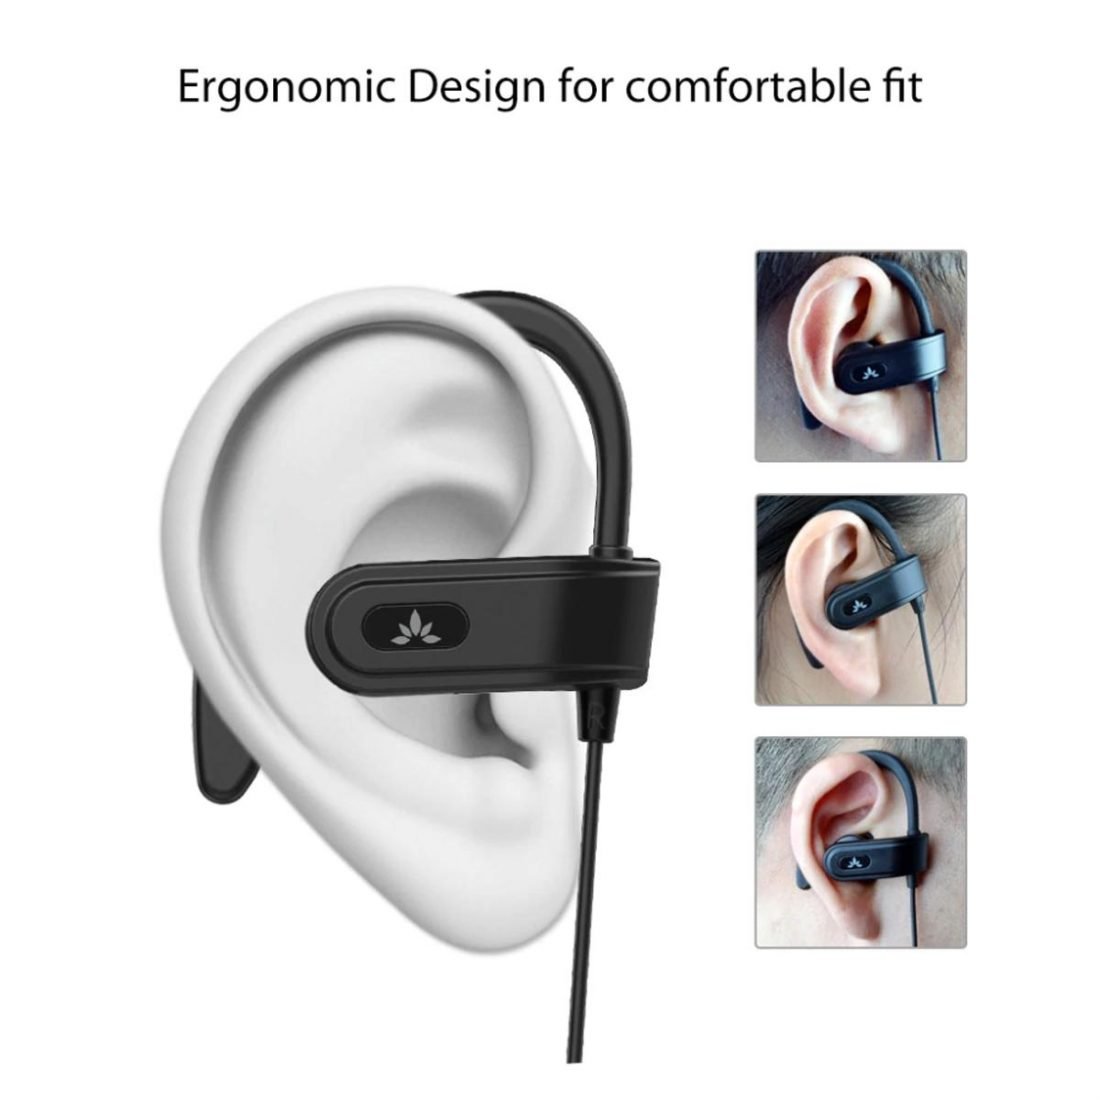 Muestra de auriculares de botón - Avantree E171 (De: Amazon)